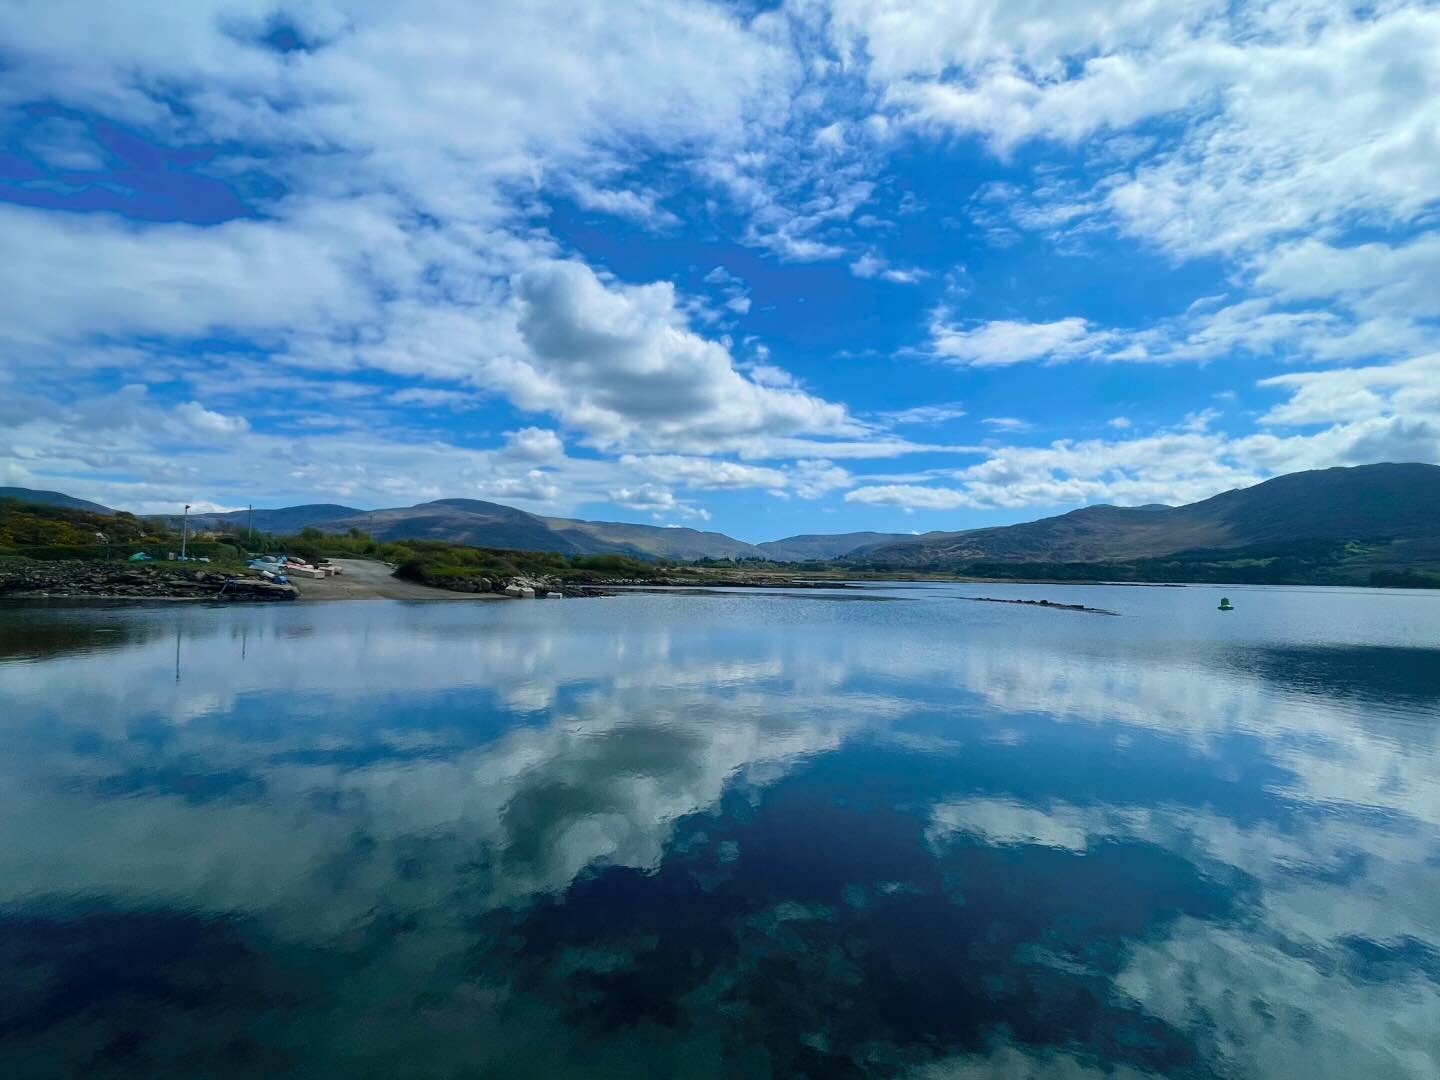 Beara reflections. 6 Day Southwest Tour of Ireland. #ireland🍀 #adventure #reflections #smallgrouptravel #smallgrouptours #bearapeninsula #kilmackillogue #harboursofinstagram #clouds #calm